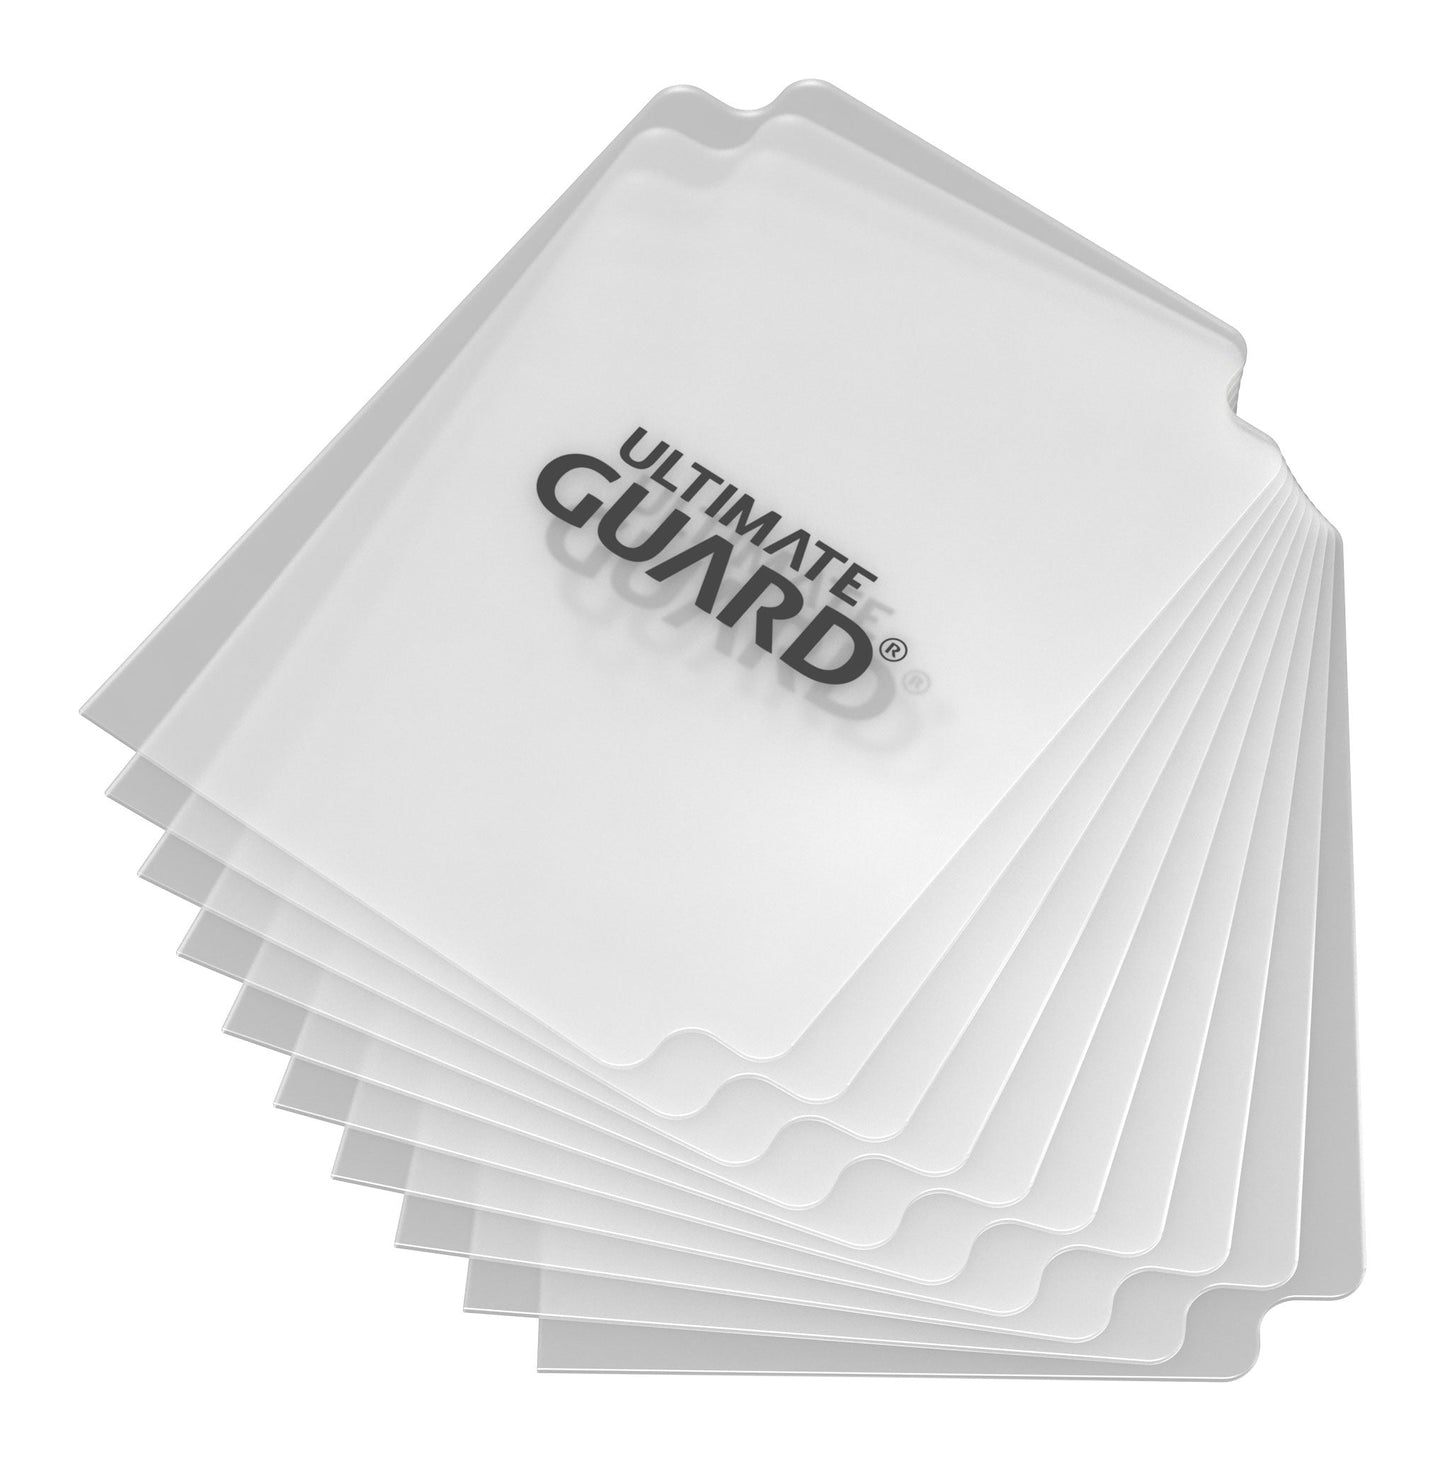 Ultimate Guard - Card Dividers (10)